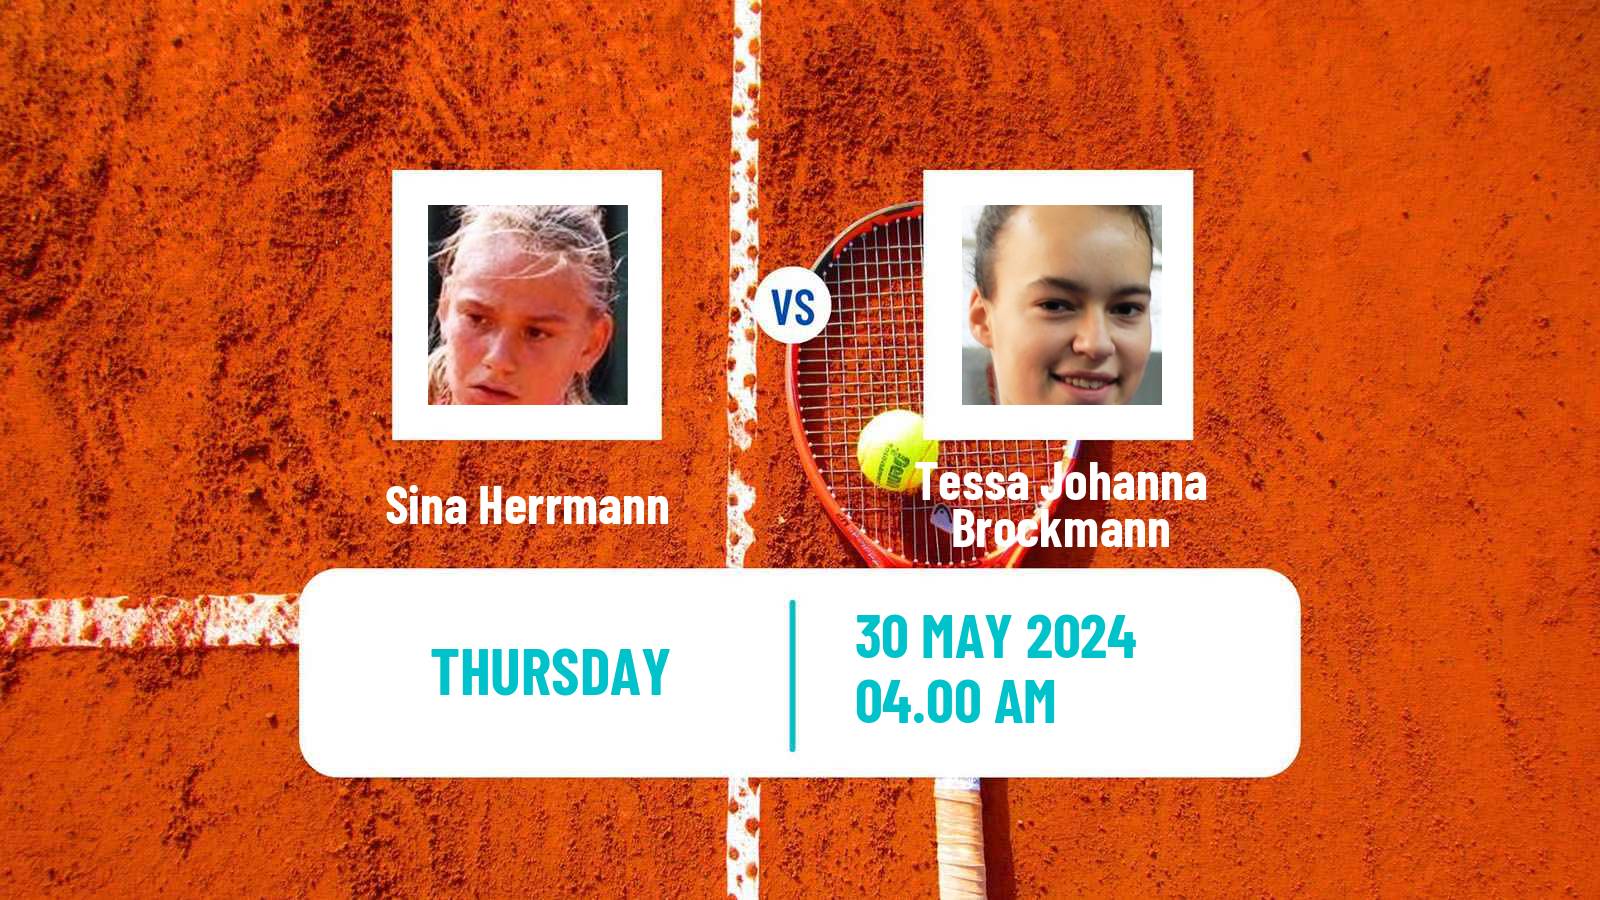 Tennis ITF W15 Bol 2 Women Sina Herrmann - Tessa Johanna Brockmann